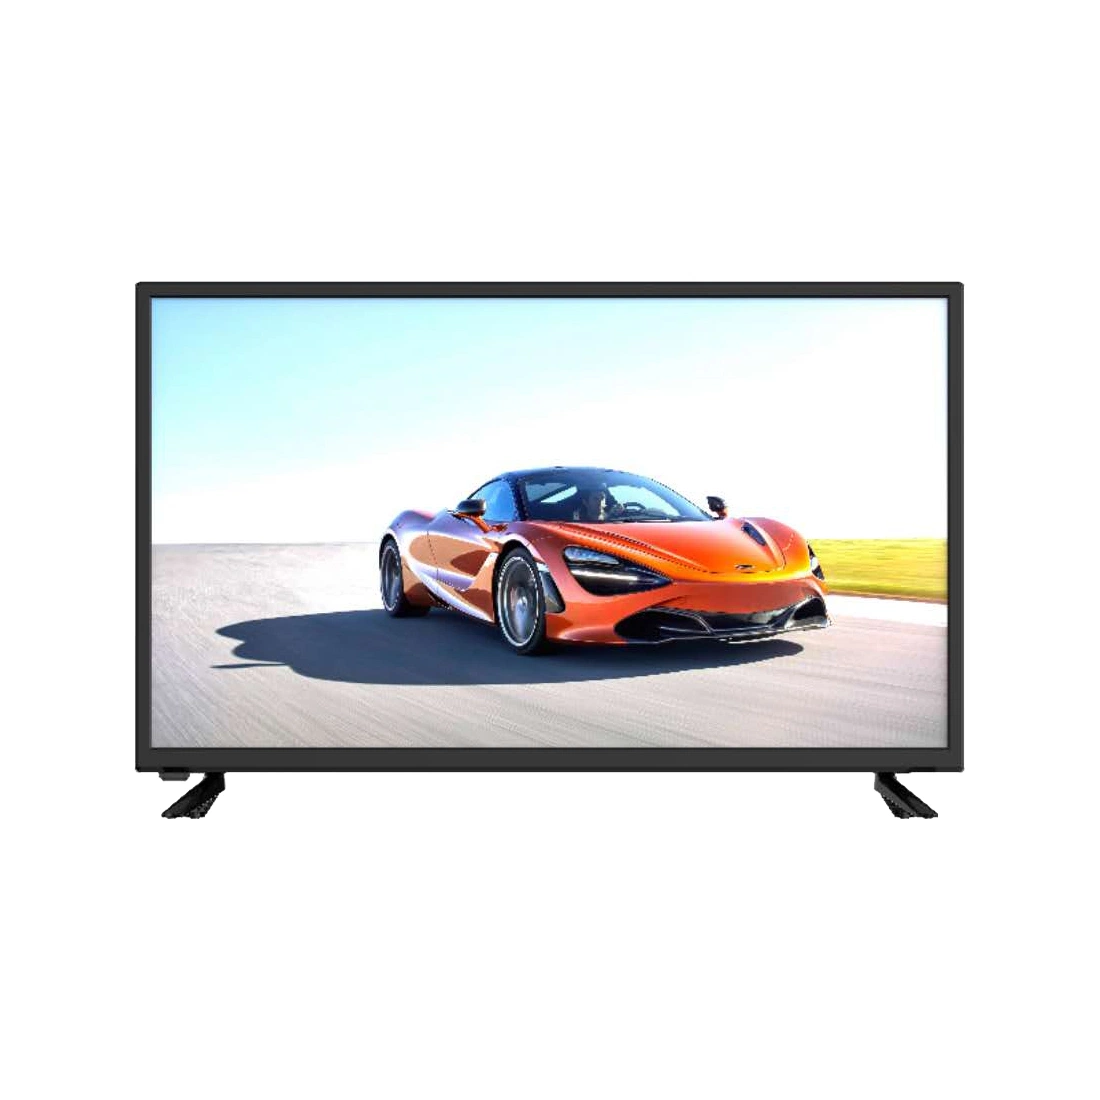 OEM 19 22 24 32 43-дюймовый телевизор Smart/ DVB T2-S2 ЖК телевизор с плоским экраном Smart LED TV